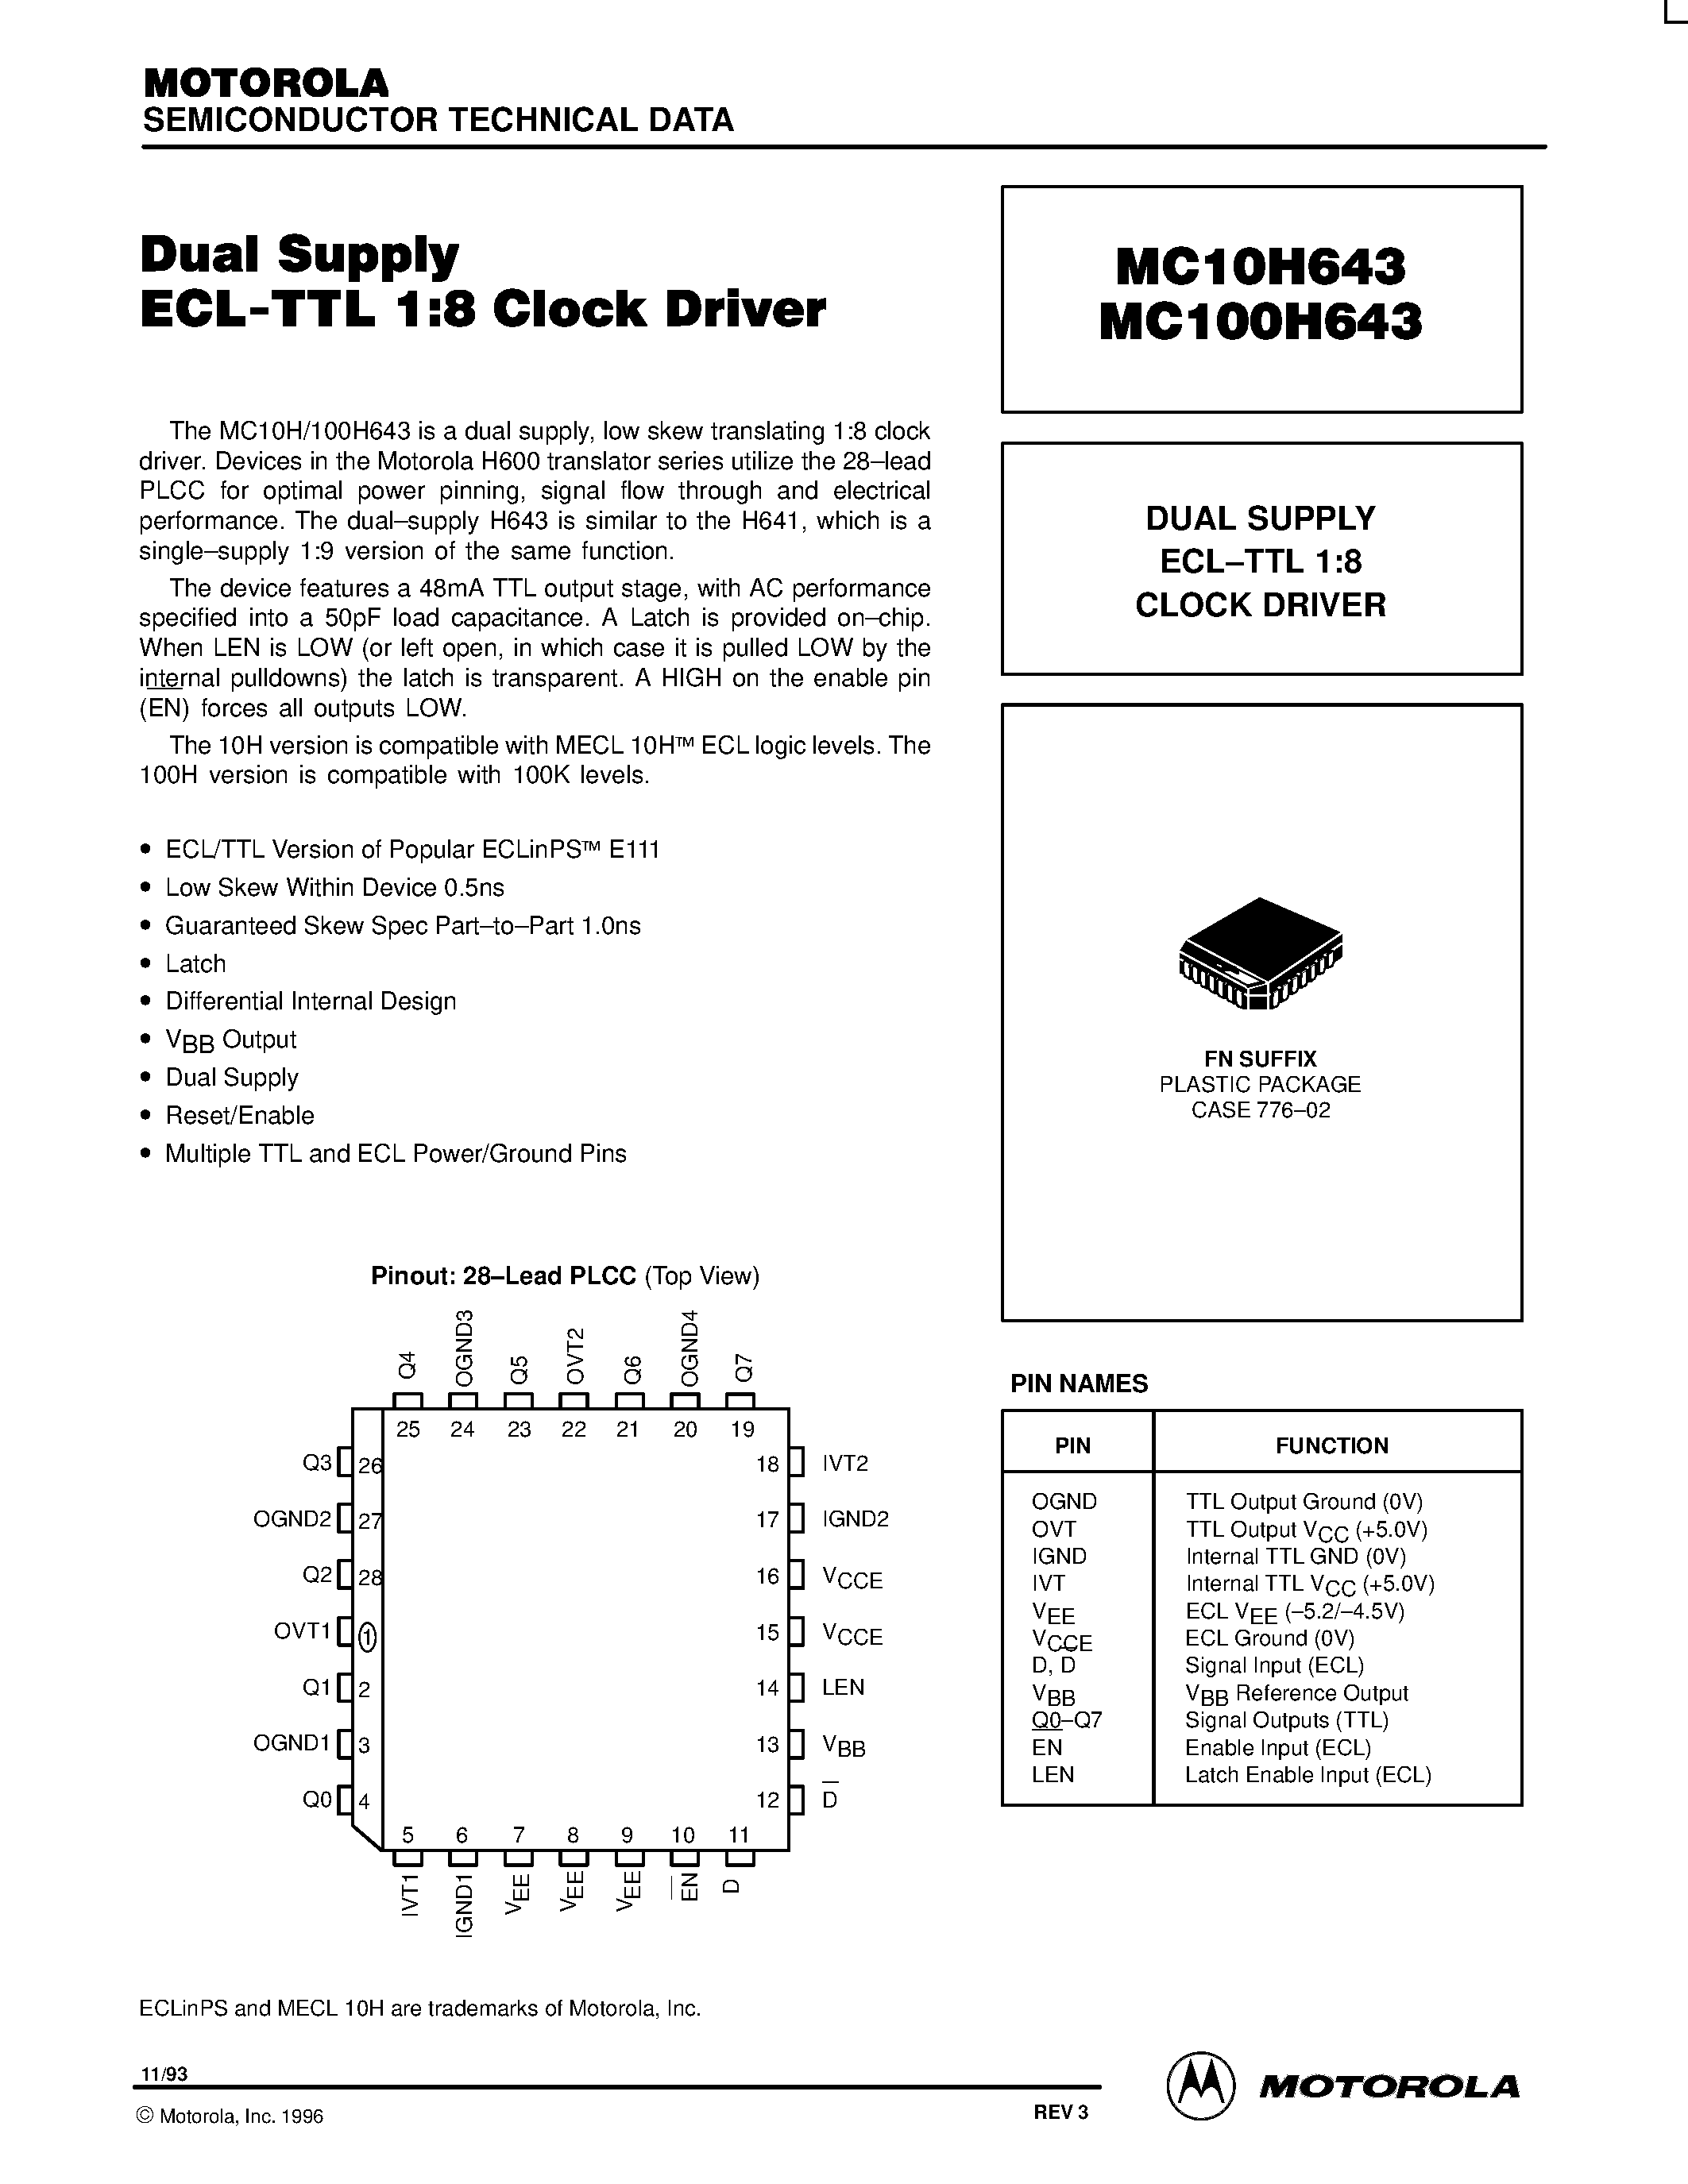 Datasheet MC10H643FN - DUAL SUPPLY ECL-TTL 1:8 CLOCK DRIVER page 1